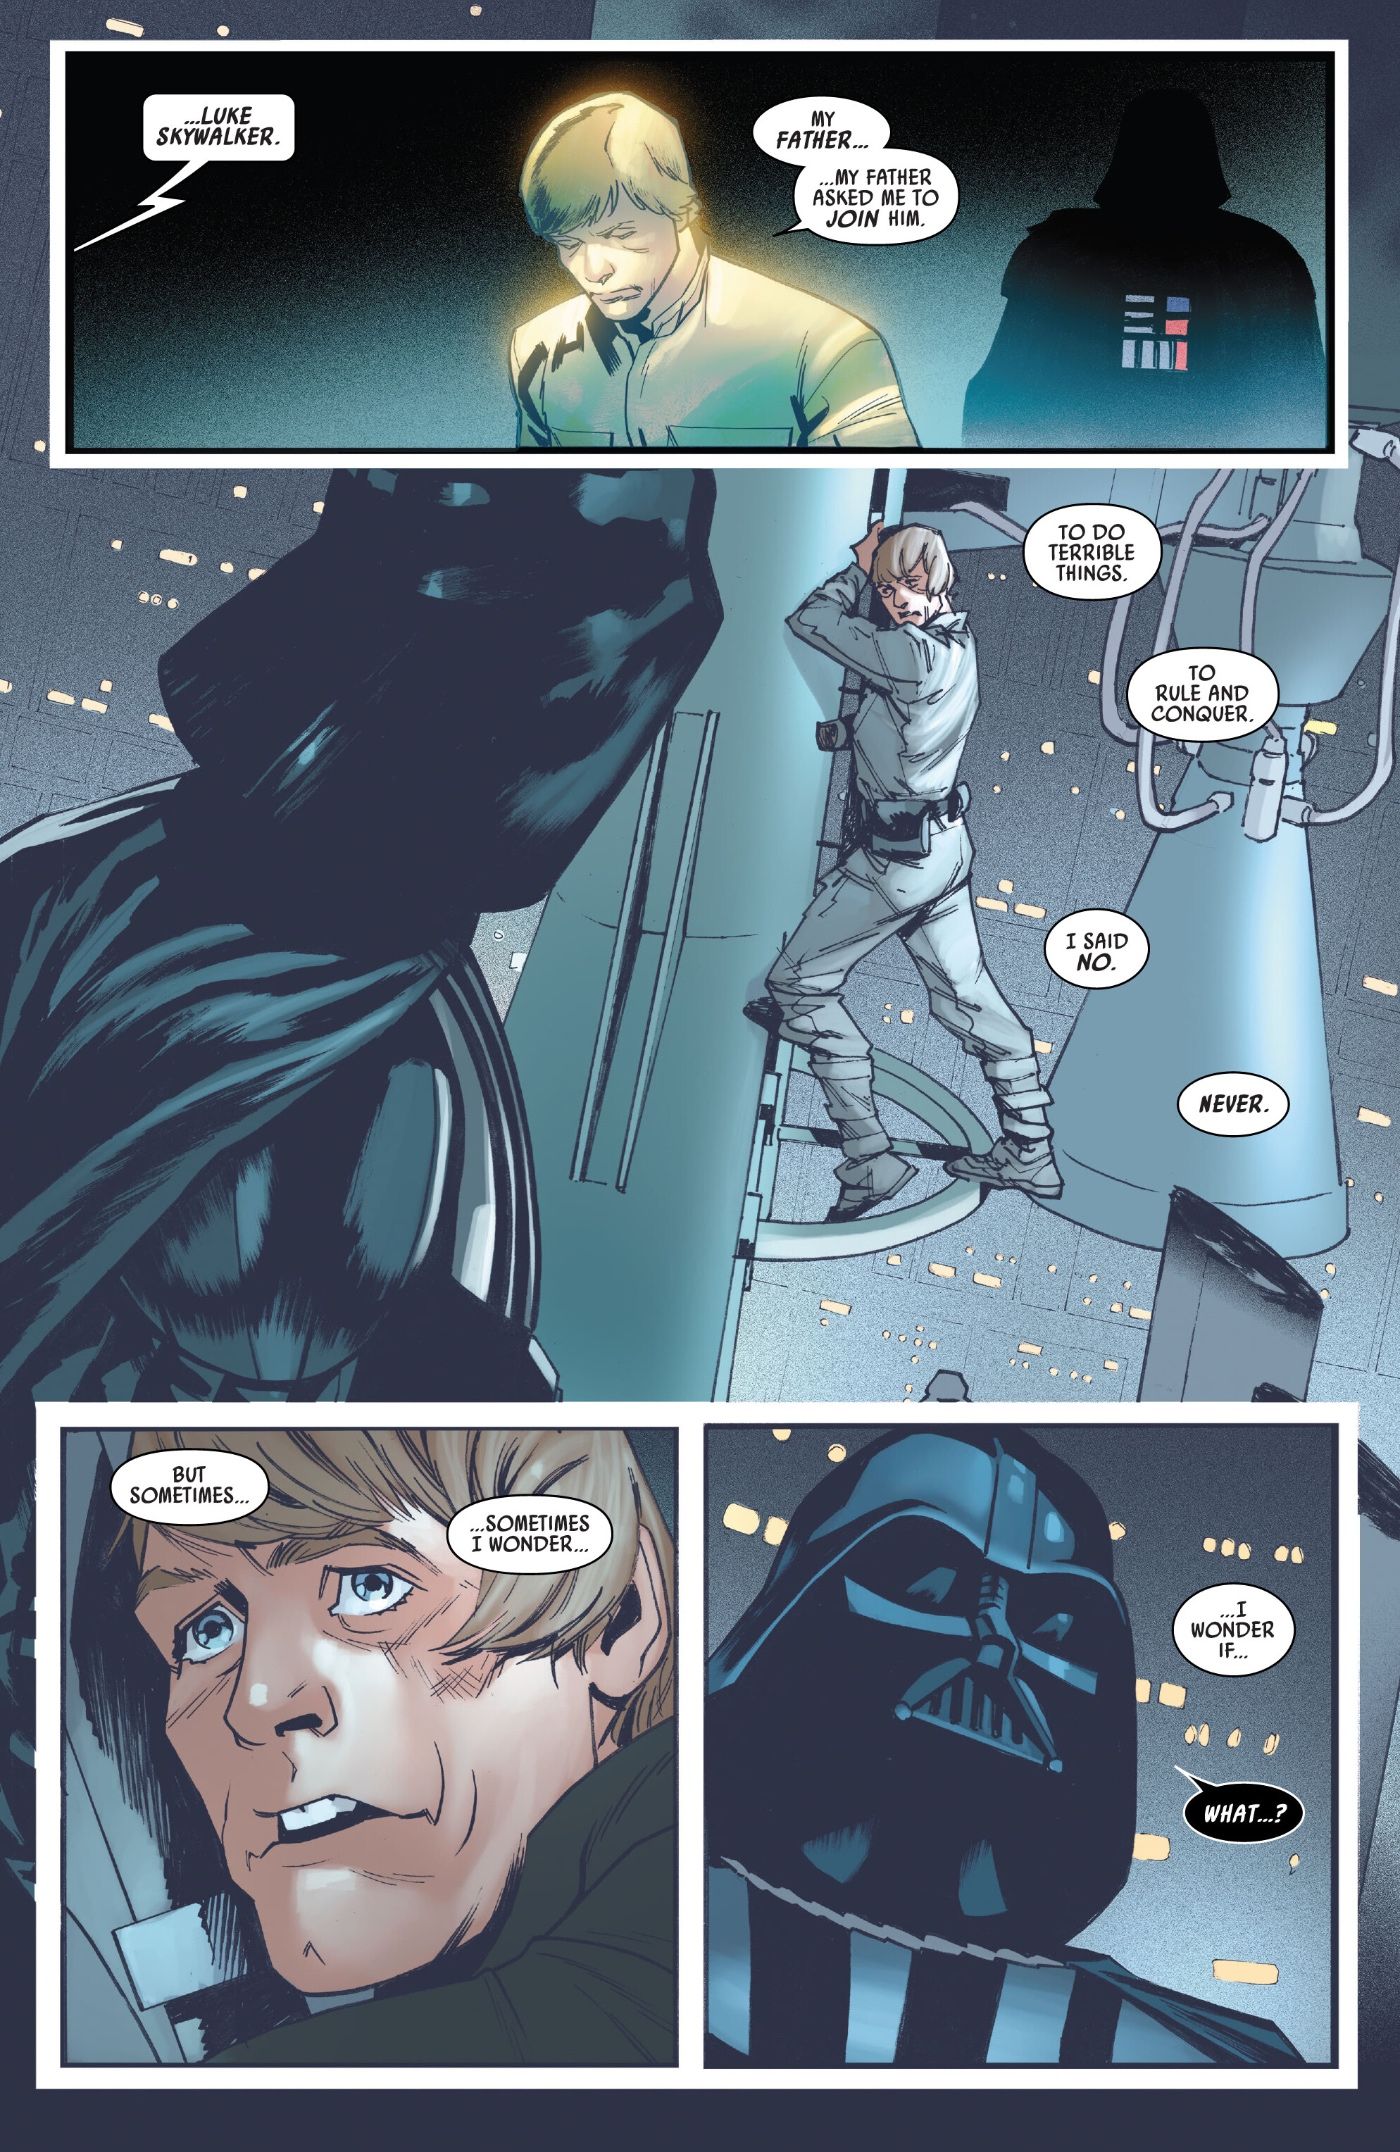 Star Wars Introduces New Darth Vader & Luke Skywalker Moment That Transformed Their Relationship